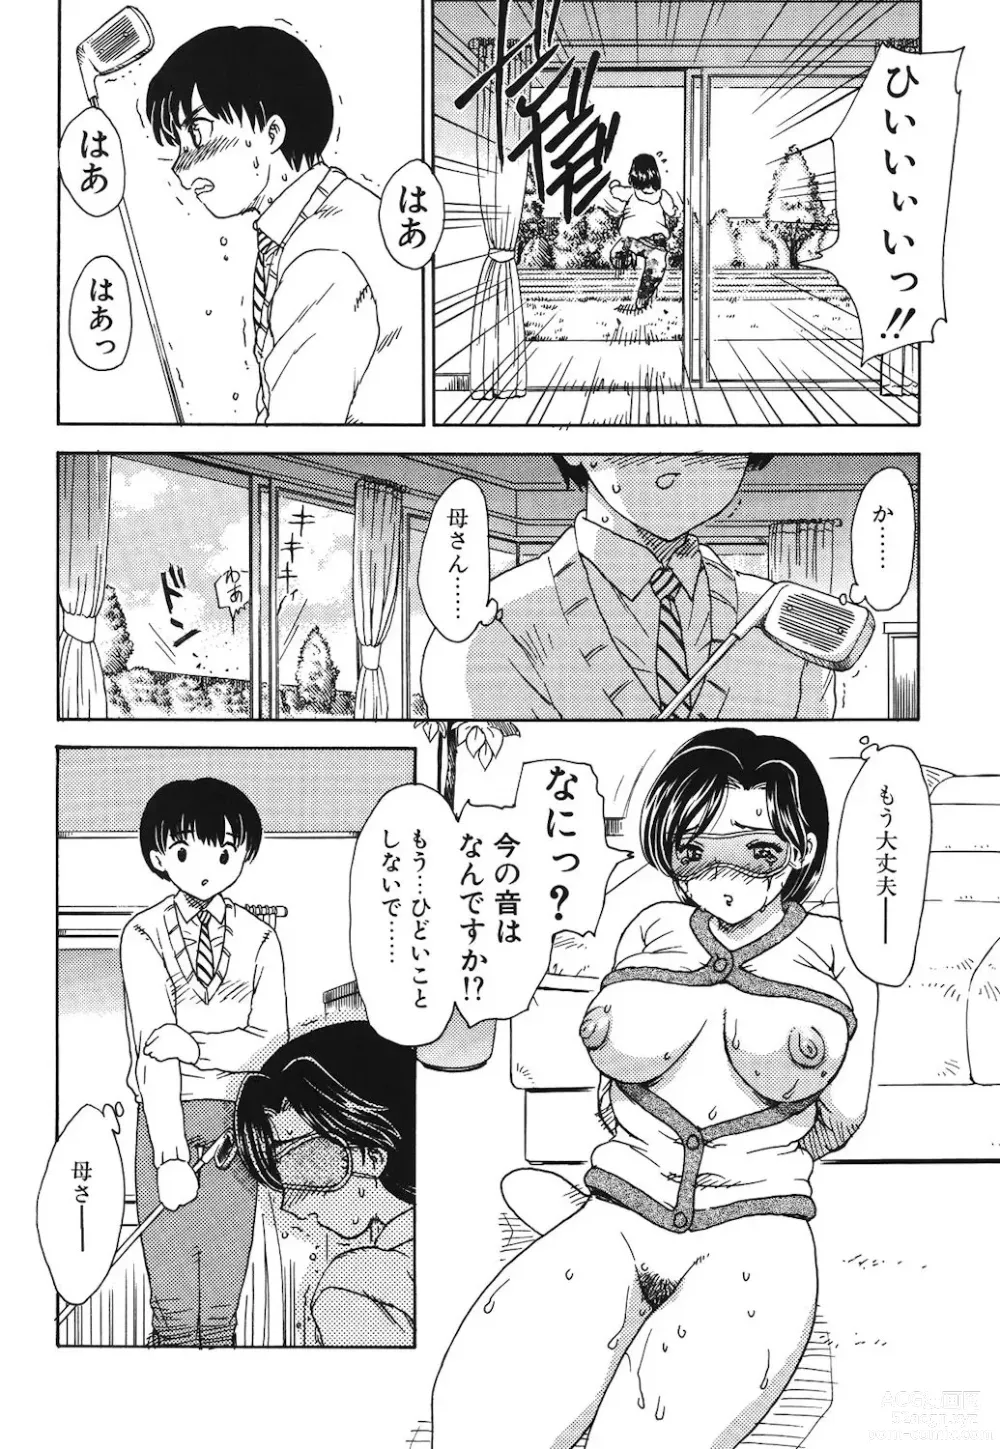 Page 7 of manga HA-HA